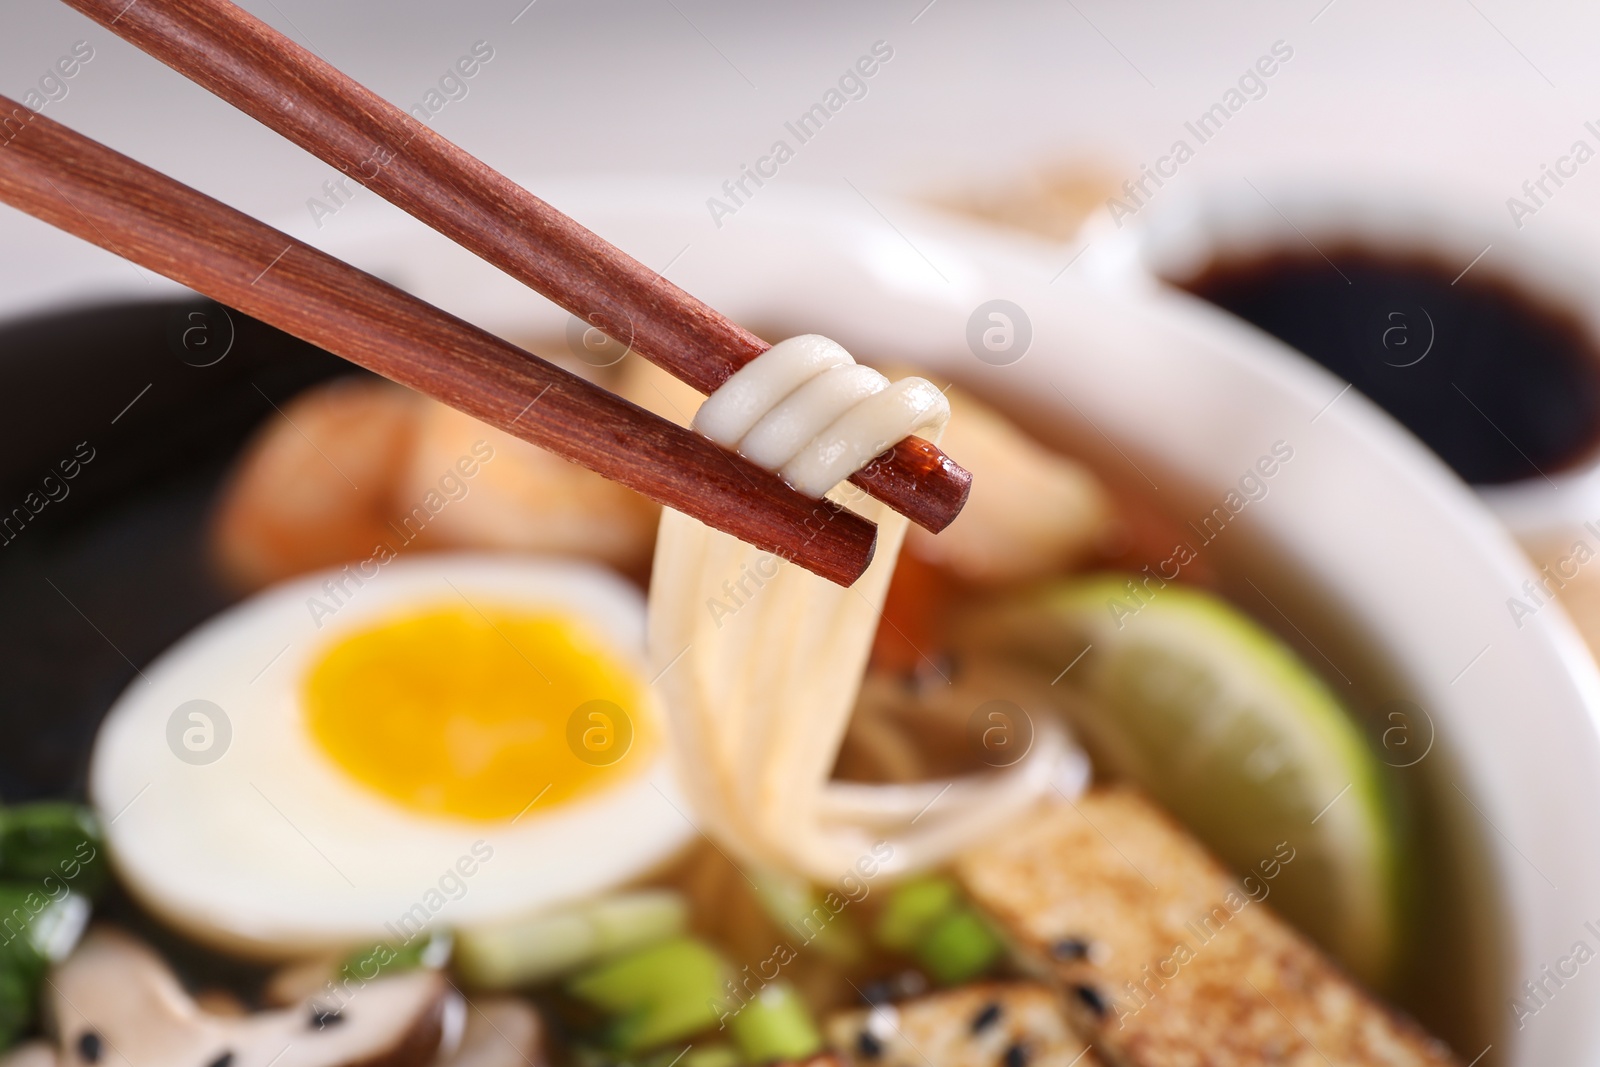 Photo of Eating delicious ramen with chopsticks, closeup. Noodle soup